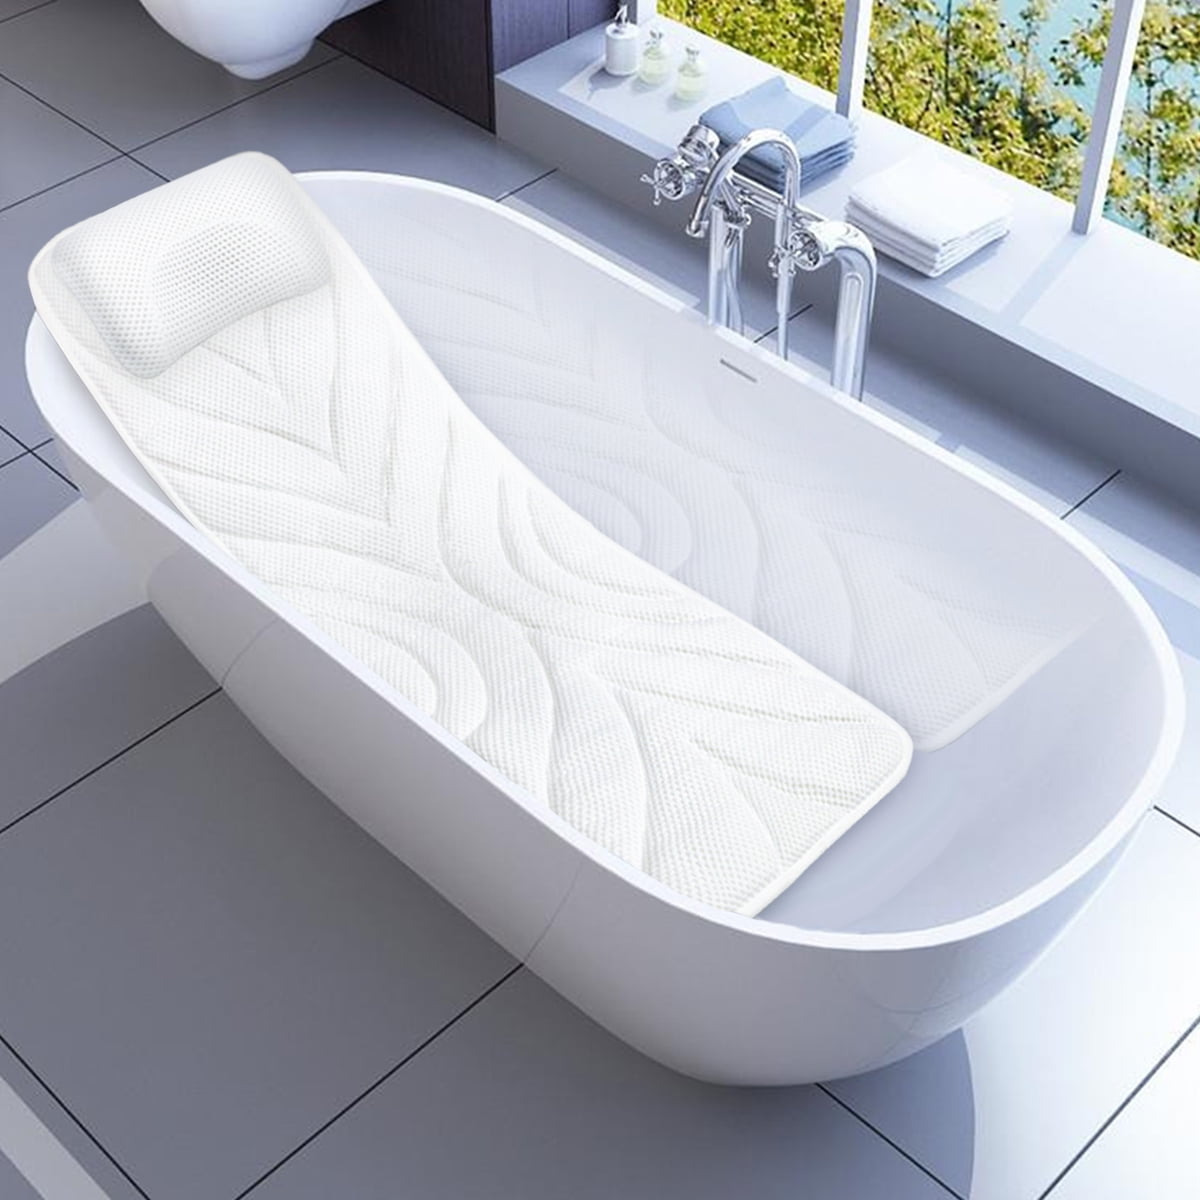 PU Waterproof Bath Cushion with Non-Slip Suction Cups, ESSORT Spa Bath Pillow 